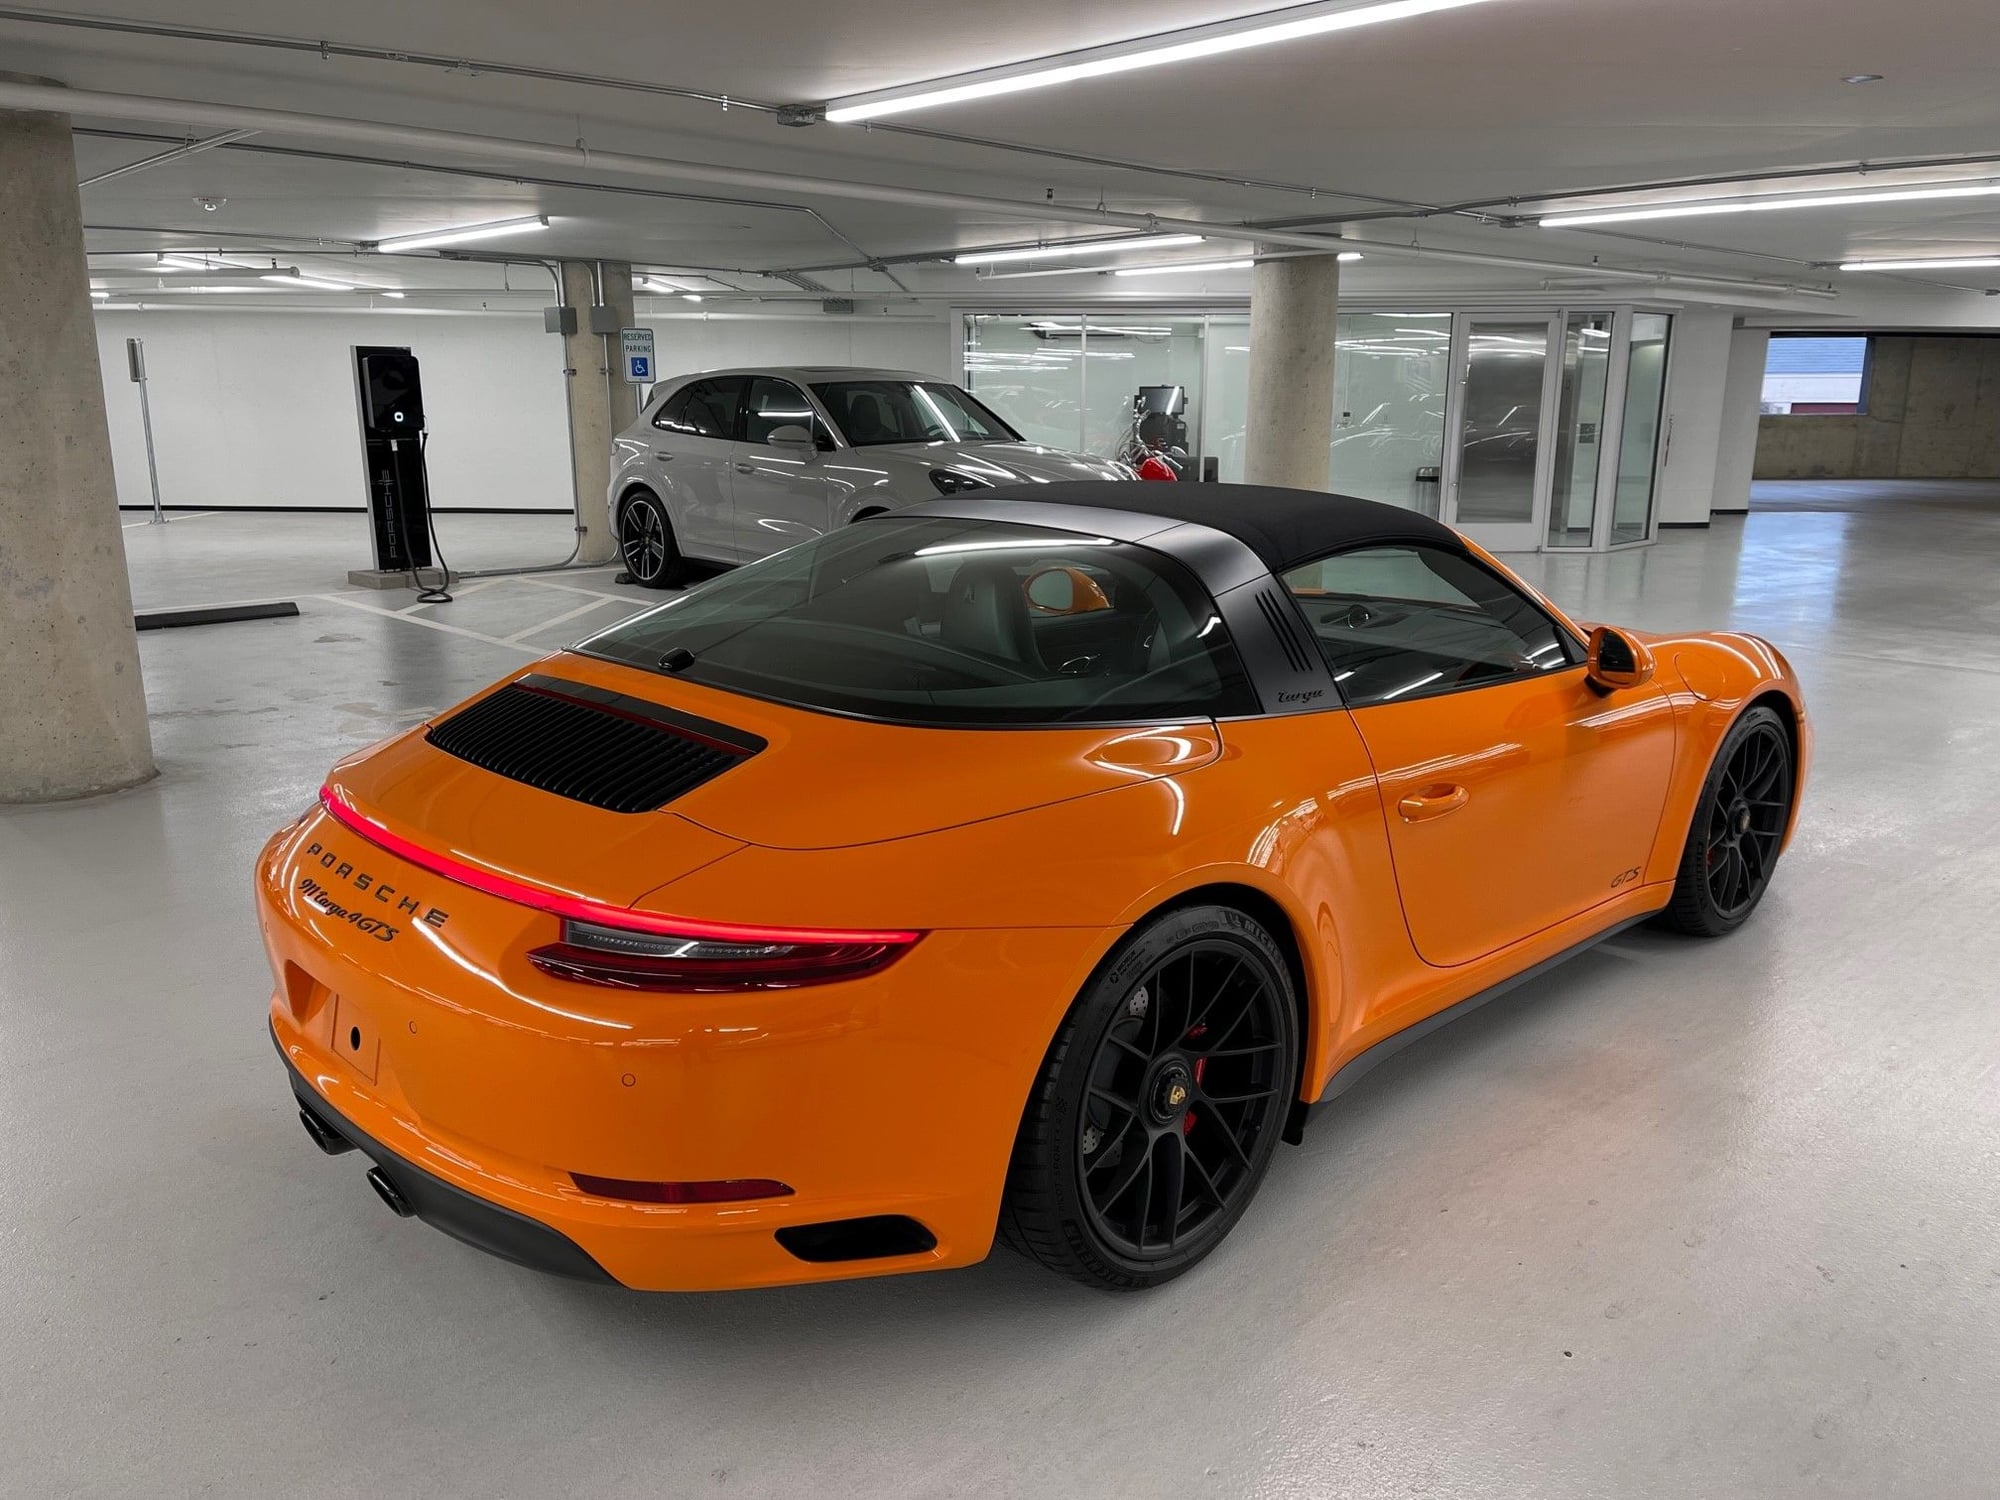 2018 Porsche 911 - 2018 911 Targa 4 GTS CPO PTS Pastel Orange - Used - VIN WP0BB2A98JS134952 - 2,970 Miles - 6 cyl - 4WD - Automatic - Coupe - Orange - Austin, TX 78759, United States